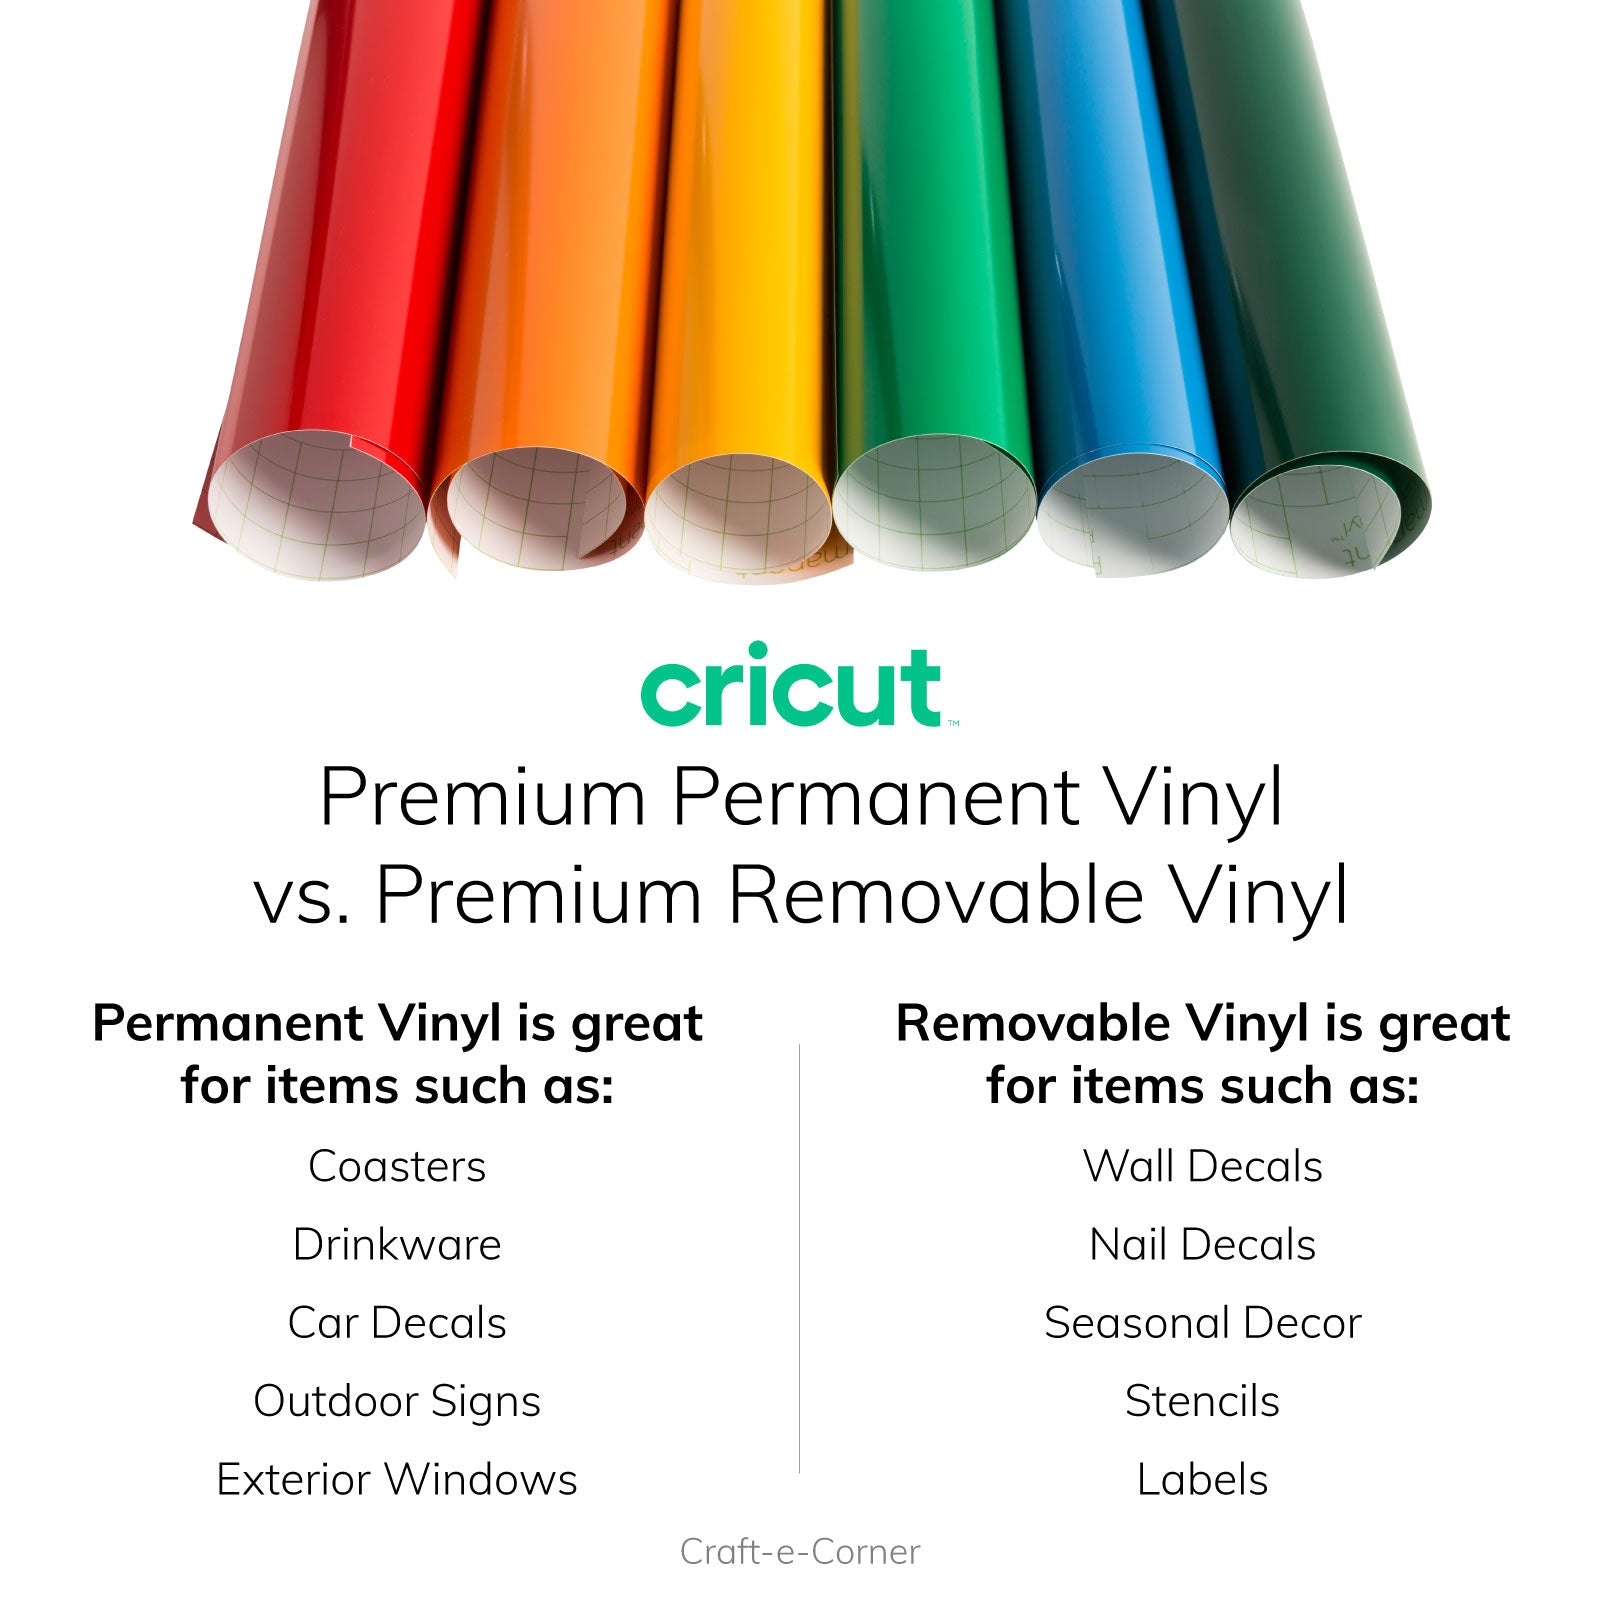 Cricut Vinyl, Ultimate Pen Set, Weeder Tool and Getting Started Guide Bundle